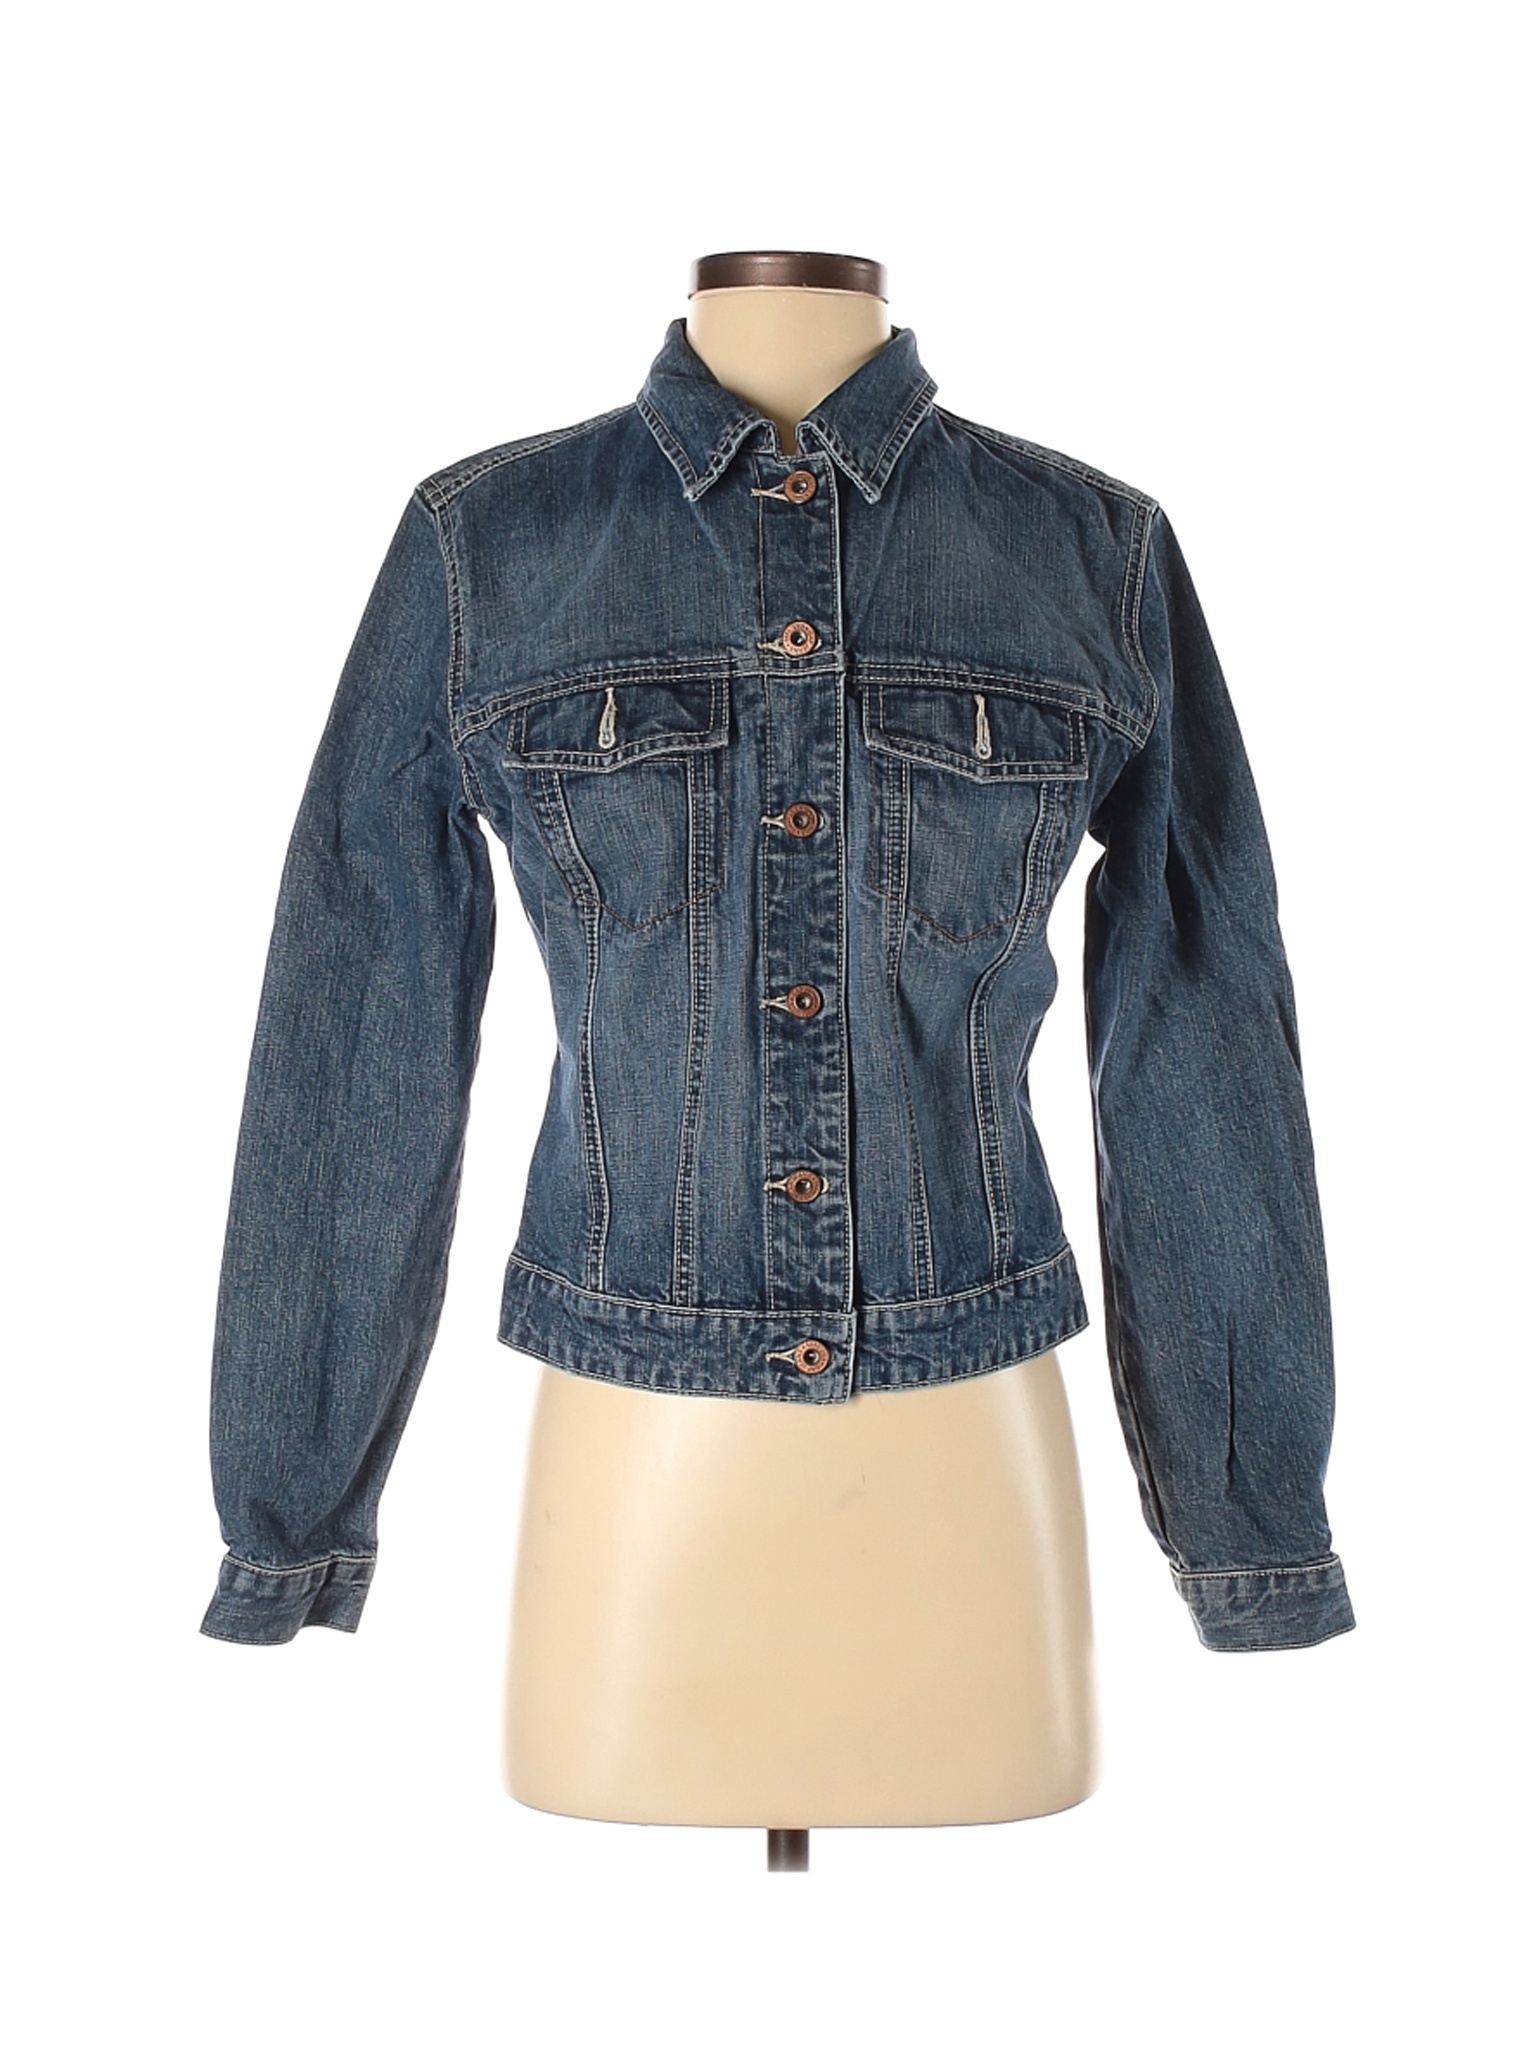 Gap Women Blue Denim Jacket S | eBay